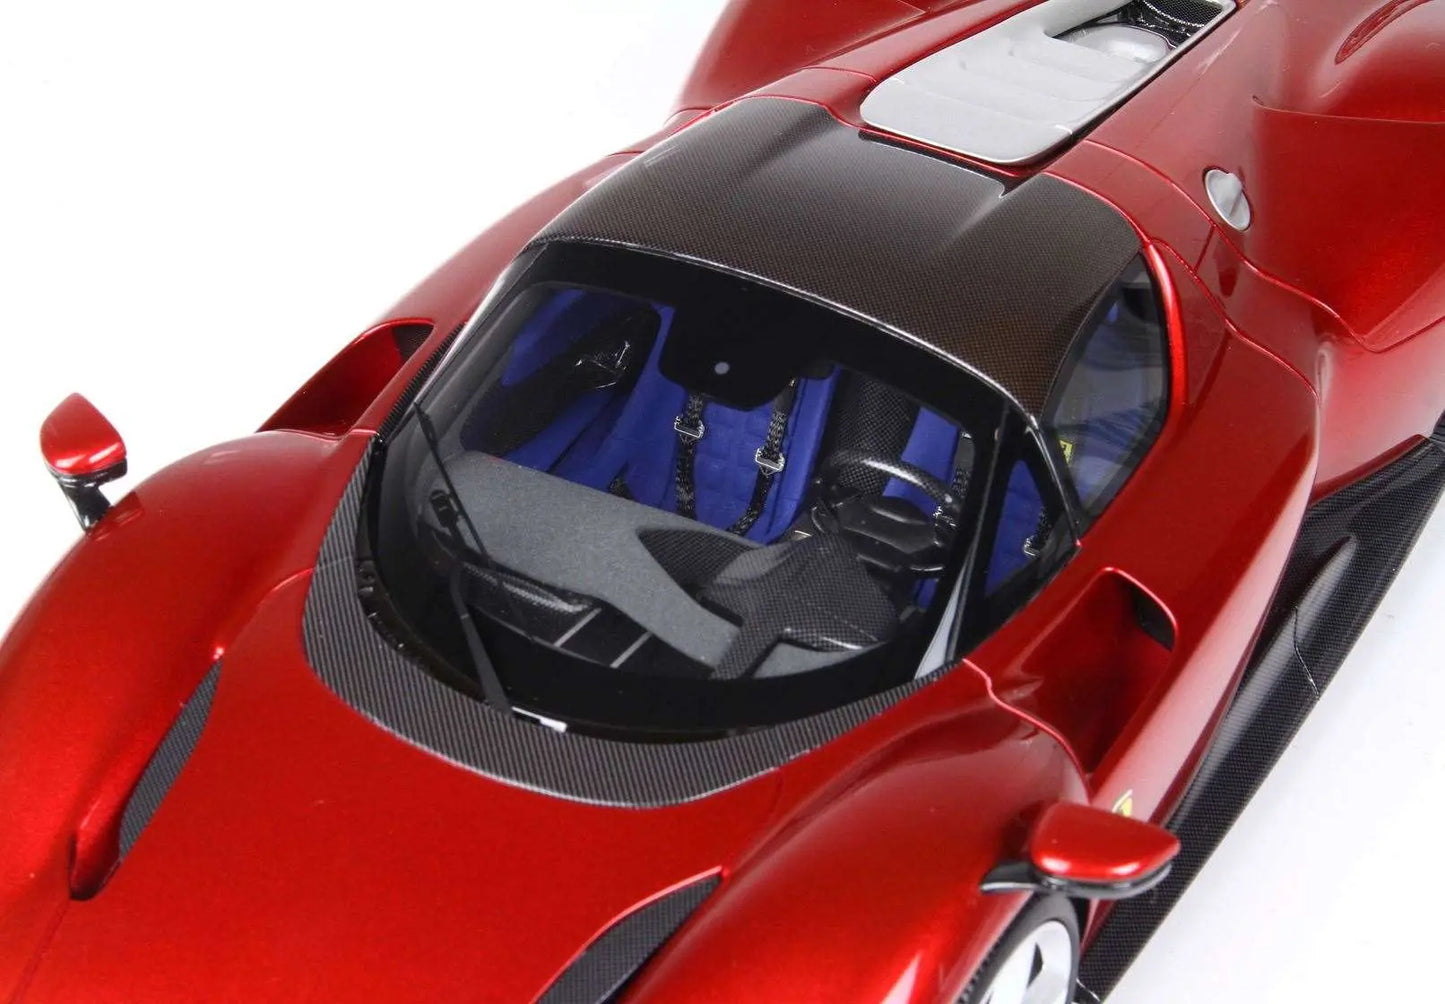 Ferrari Daytona SP3 Serie Icona Closed Roof - Metallic Red Magma 1:18 Scale